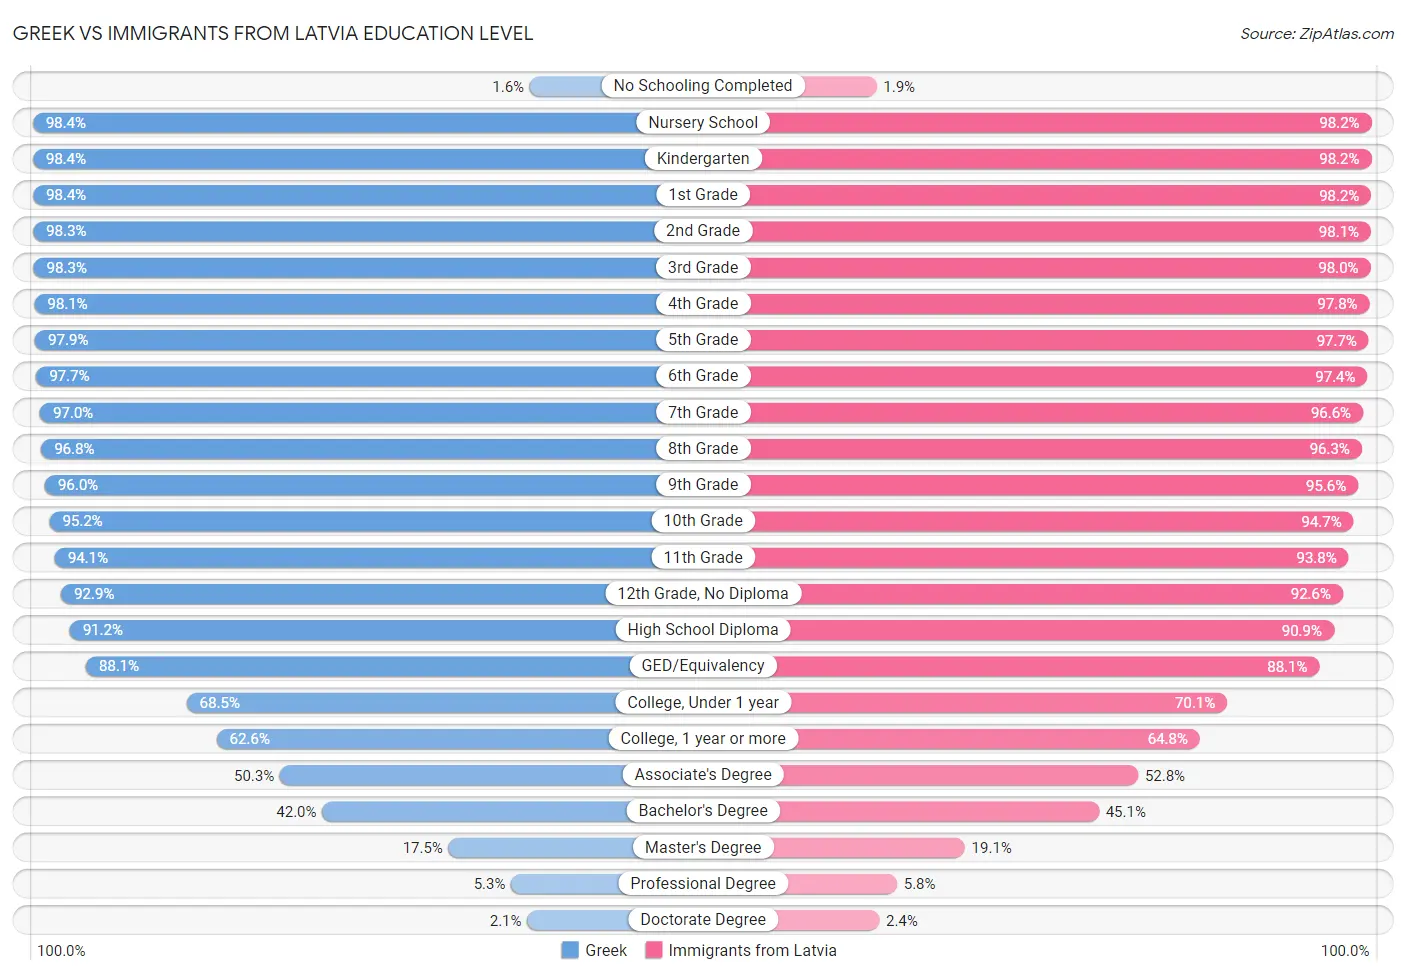 Greek vs Immigrants from Latvia Education Level